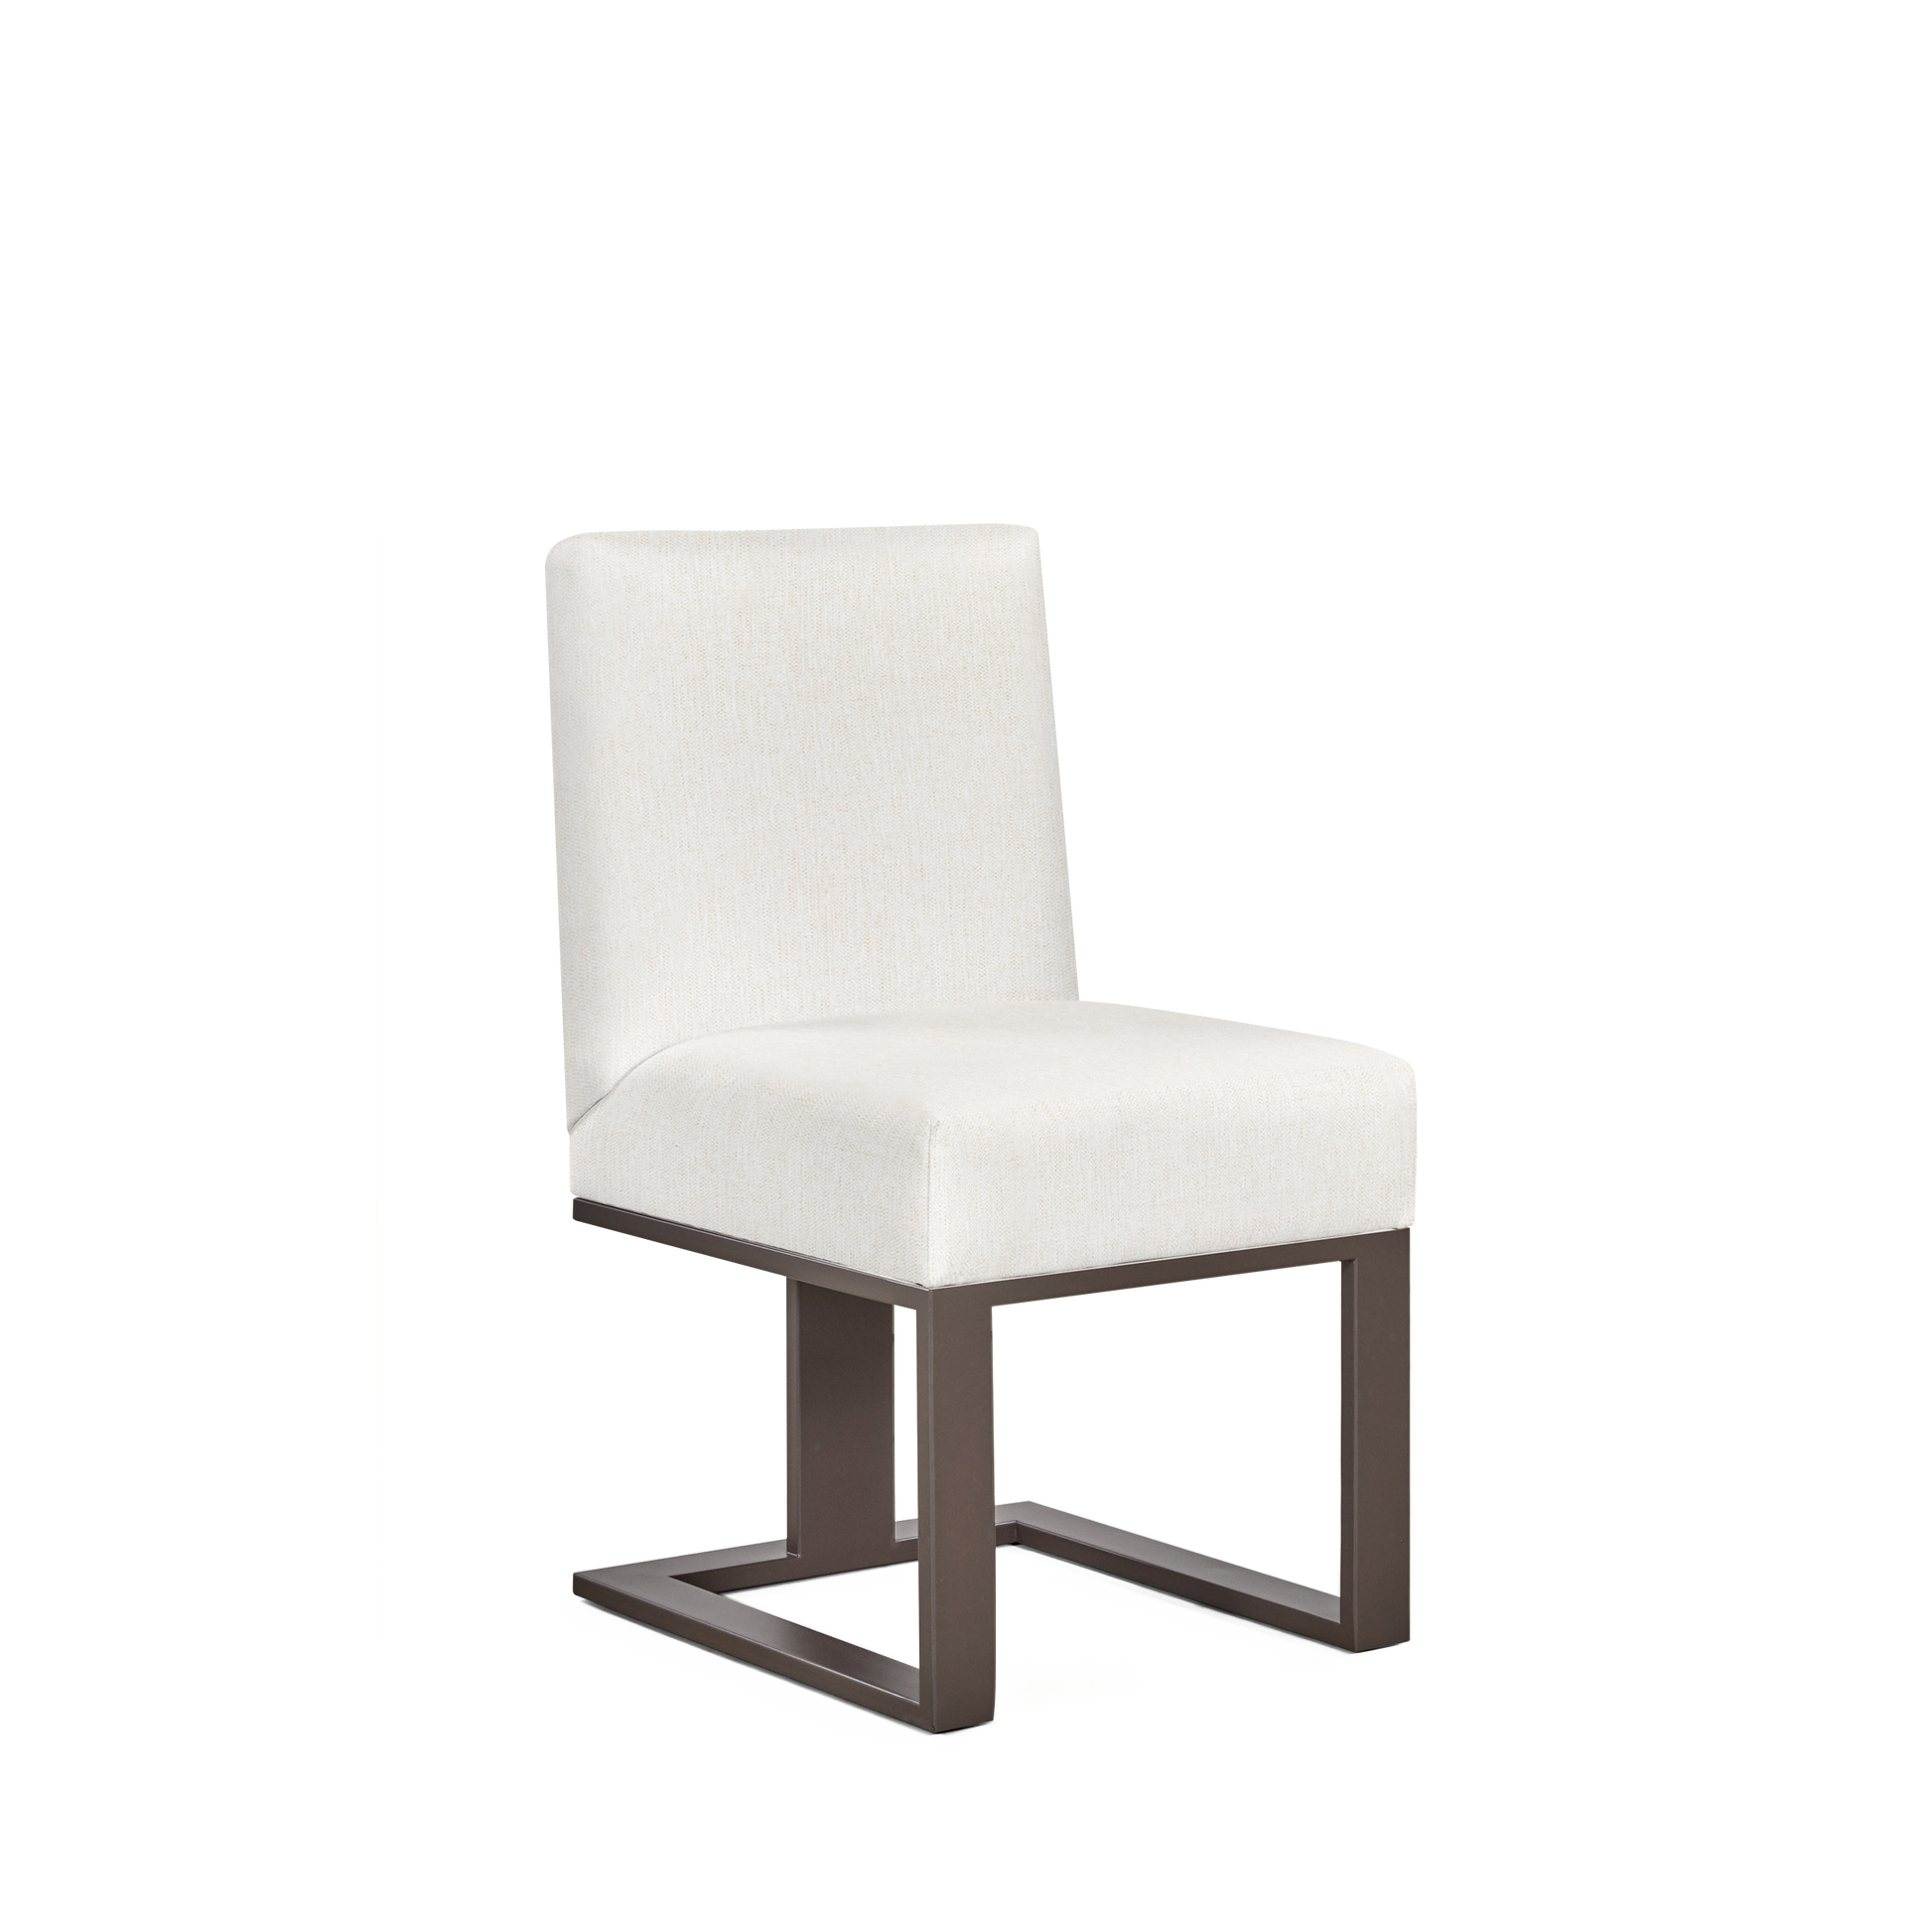 Len chair with bolt white textile and moka wood legs 